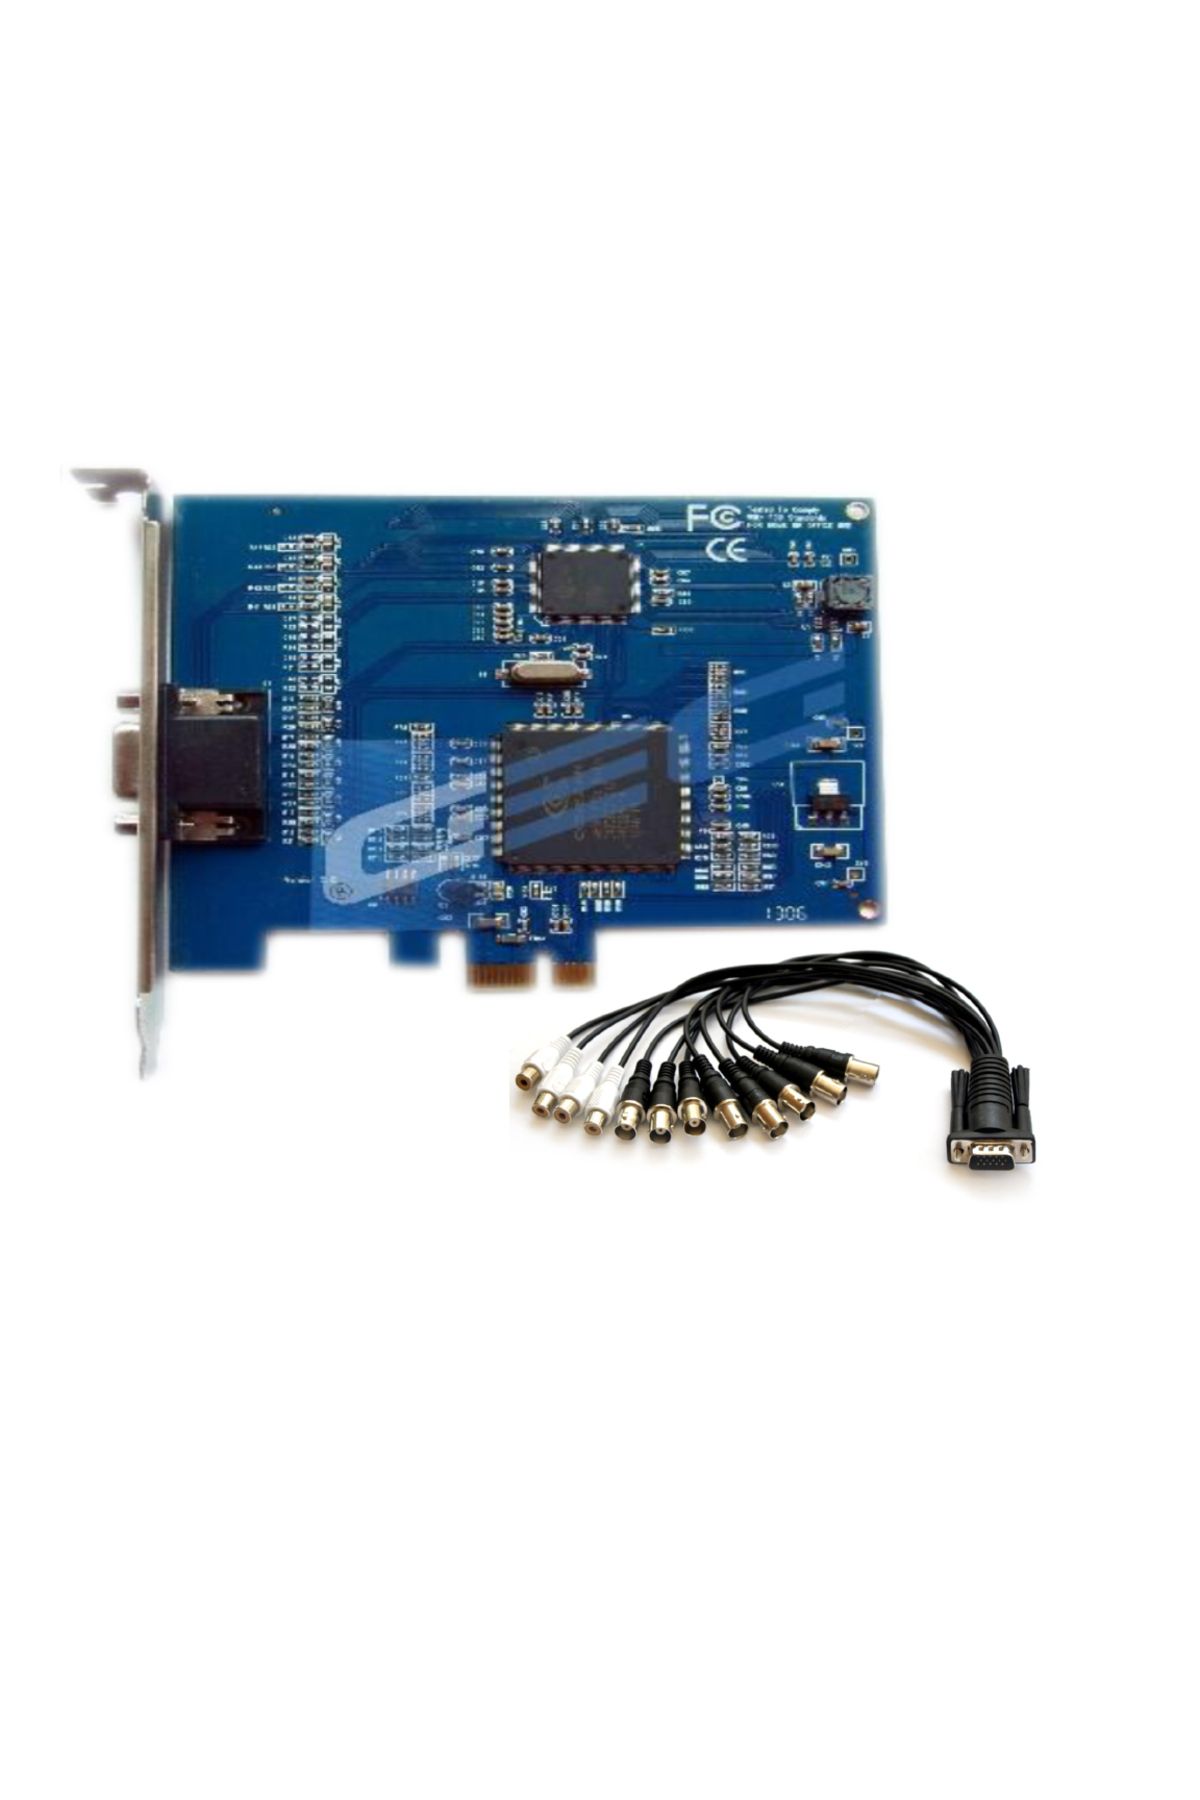 GEG PCI-E Analog Kamera Bilgisayar Video Kayıt DVR Kart 8 Kanal Video 4 Kanal Ses 960H Kayıt